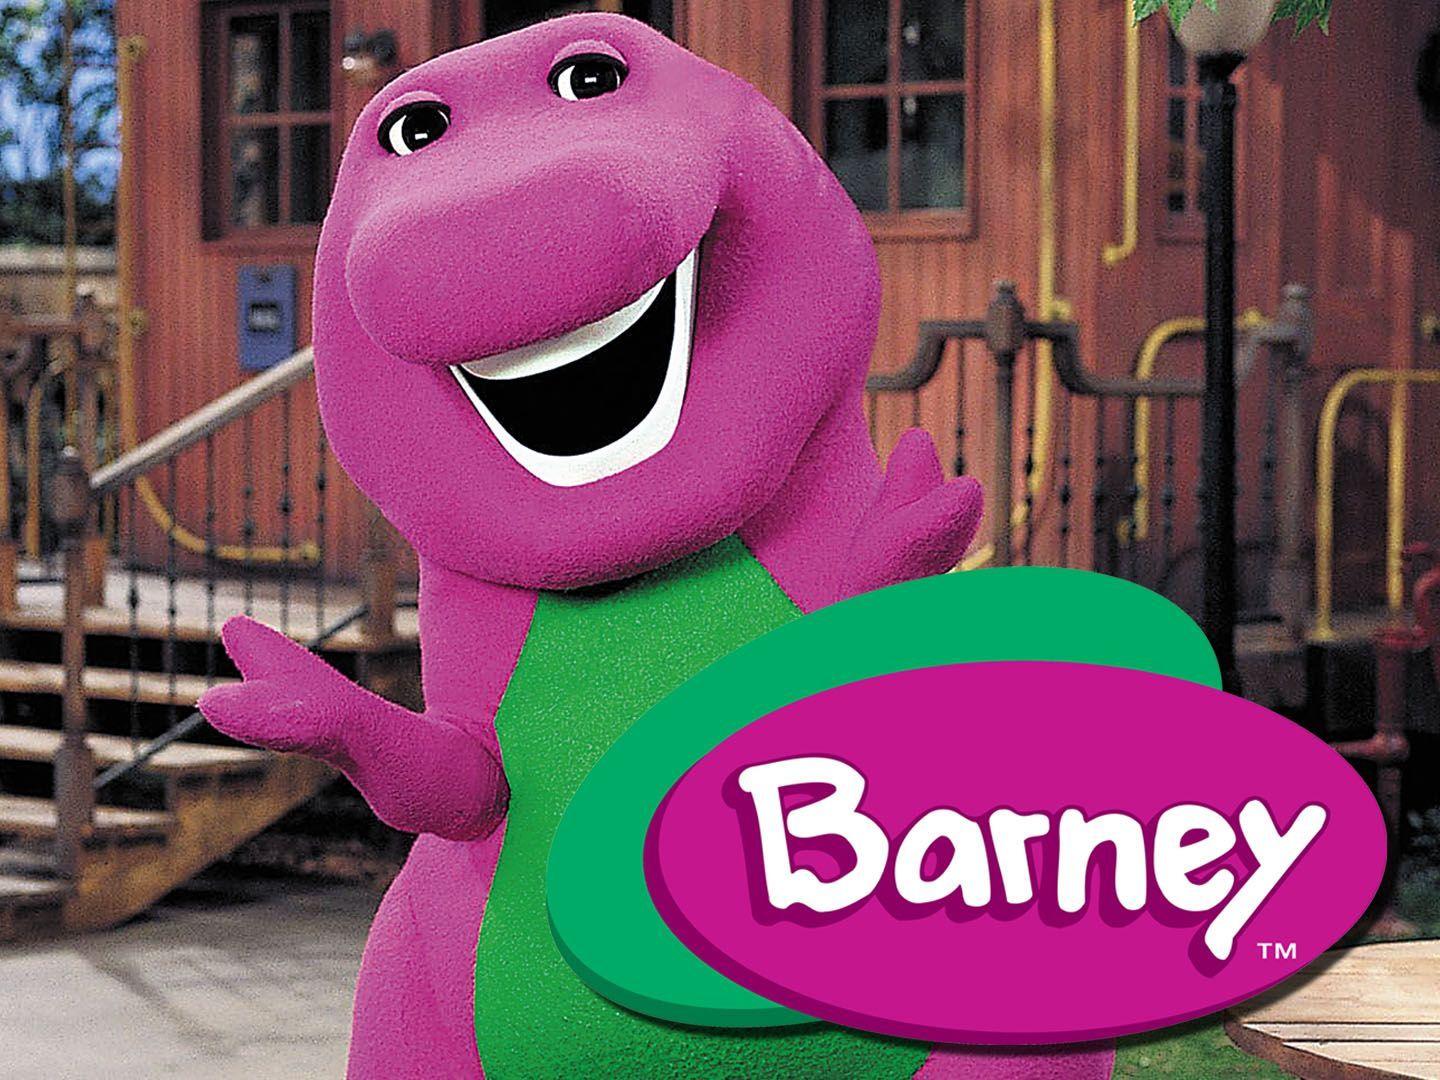 Barney picture, Barney wallpaper